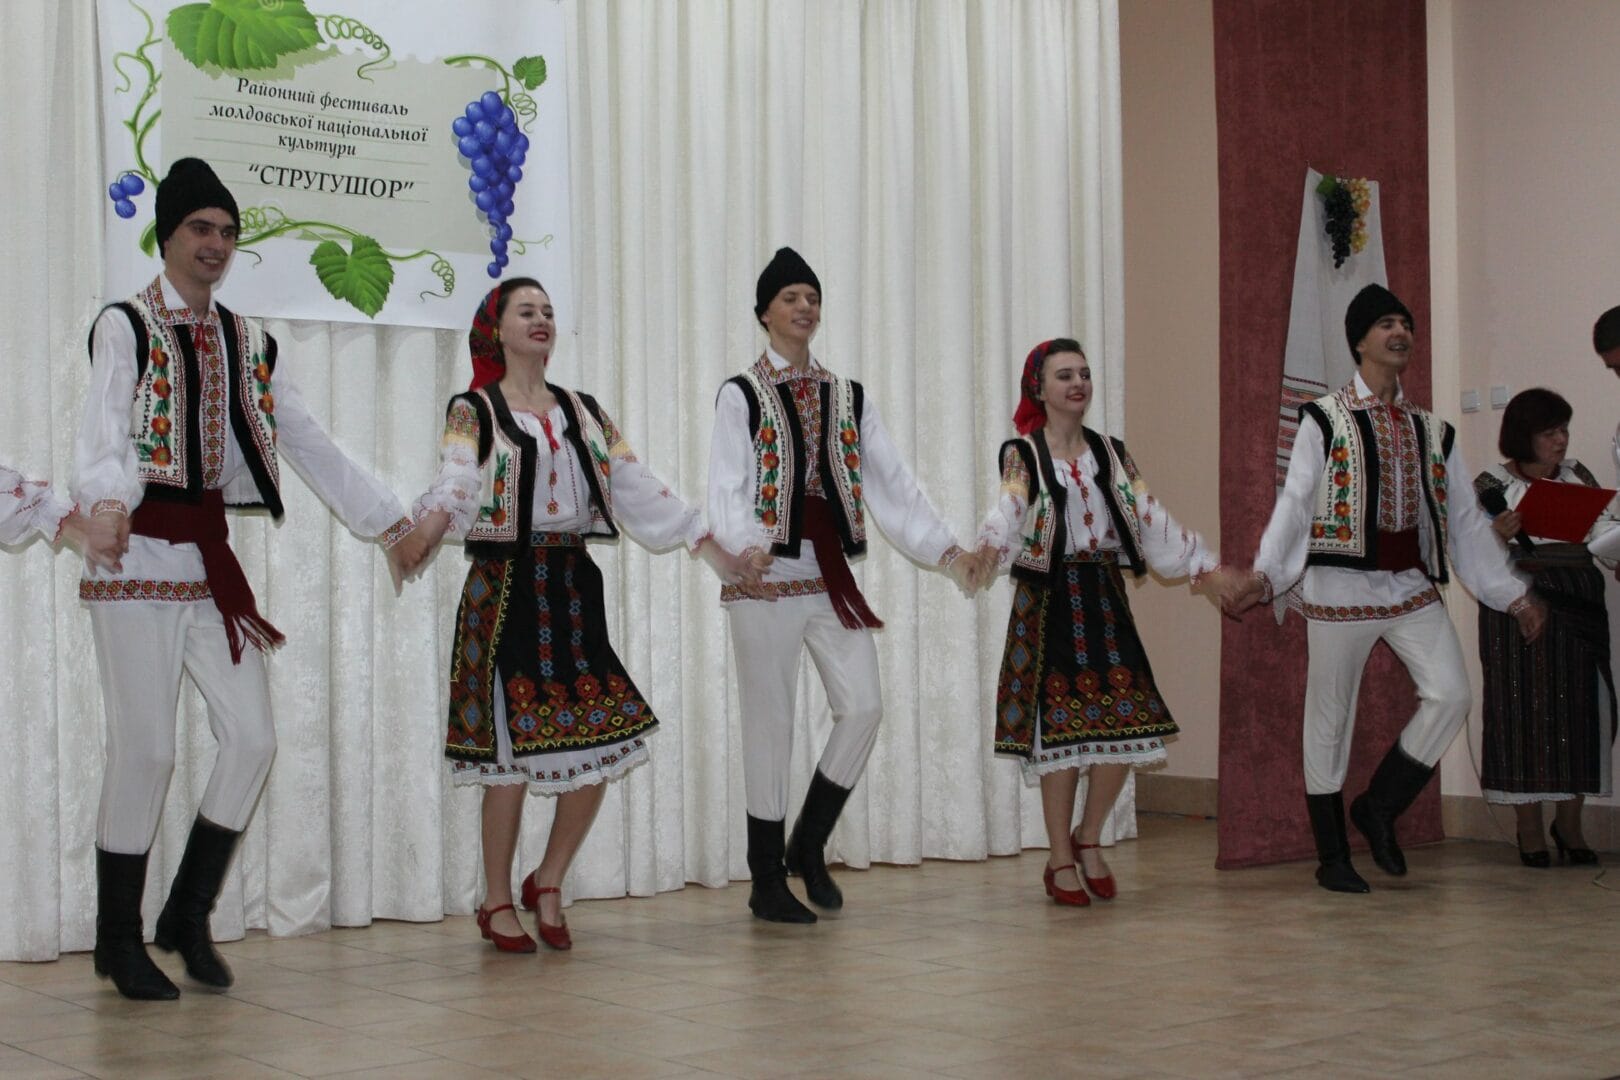 Celebration of the Struhushor Festiva